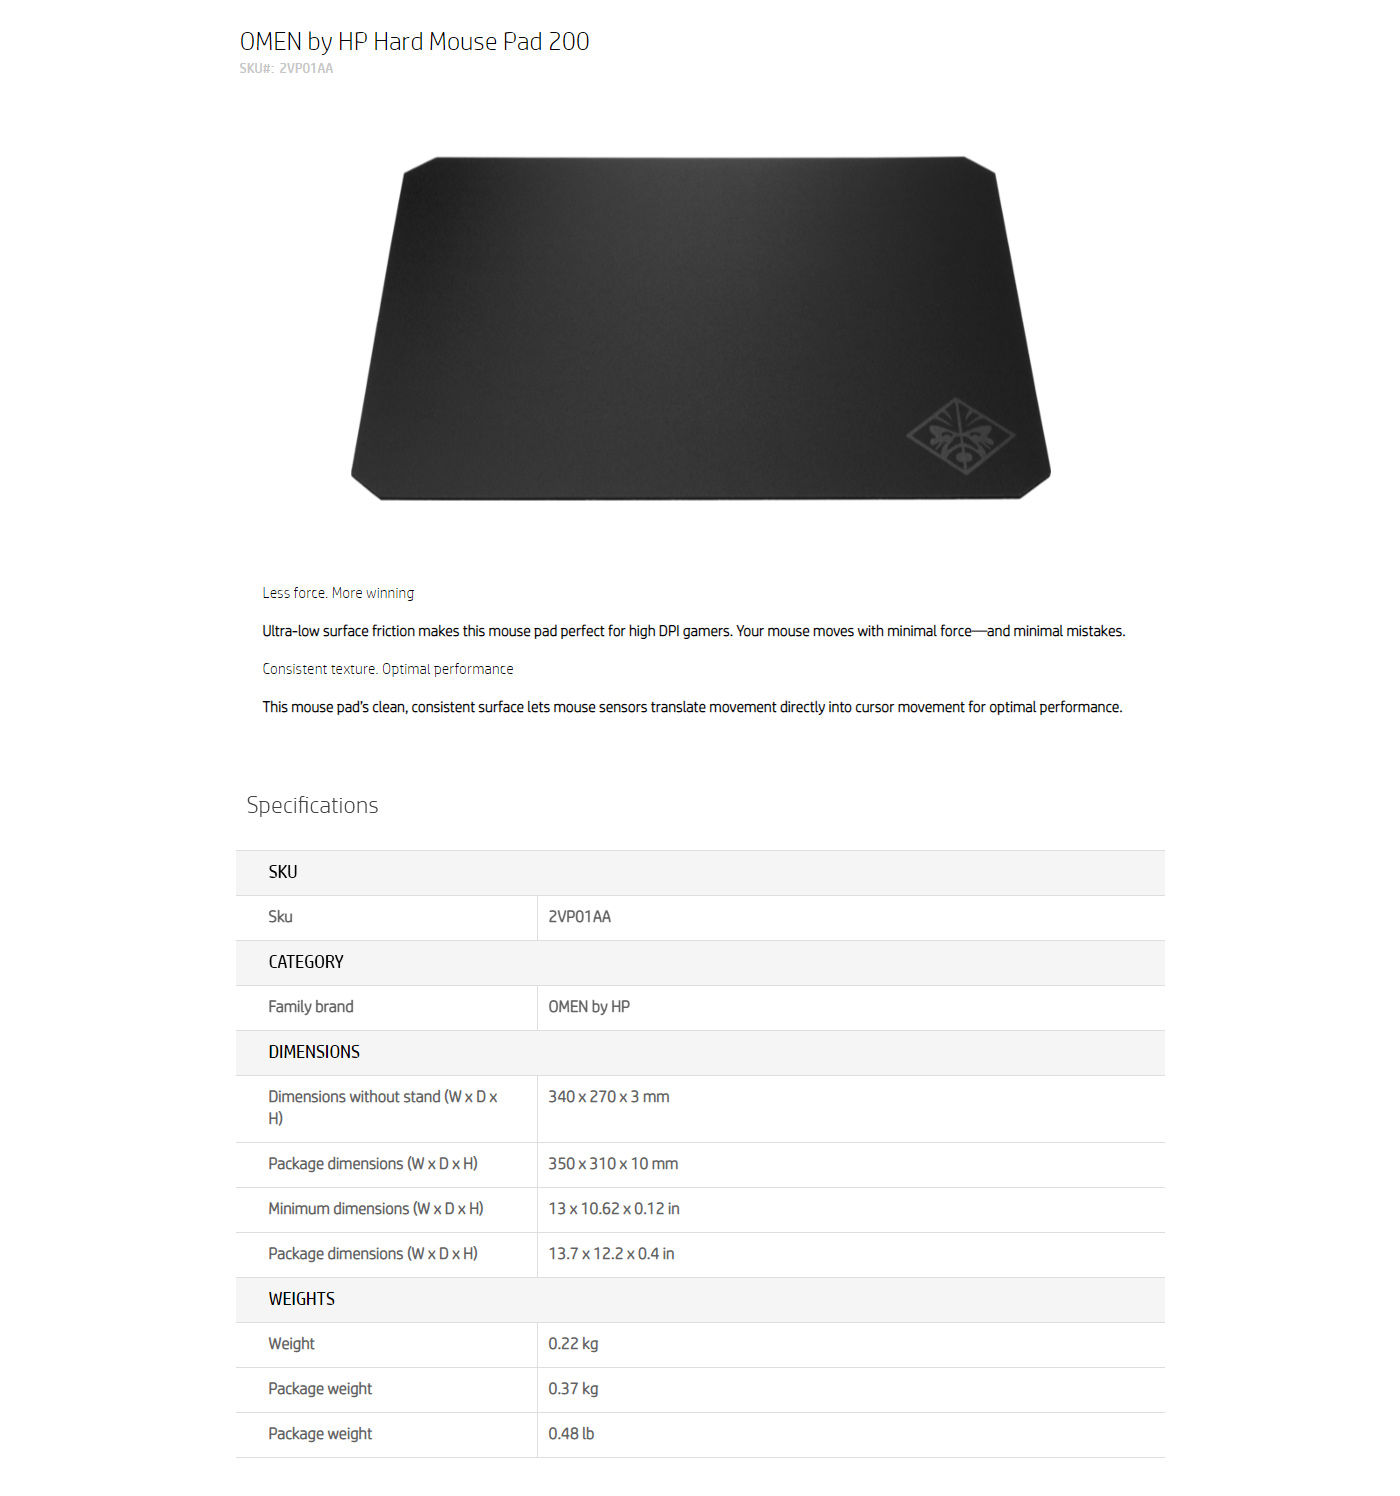  Buy Online HP OMEN Hard Mouse Pad 200 (2VP01AA)